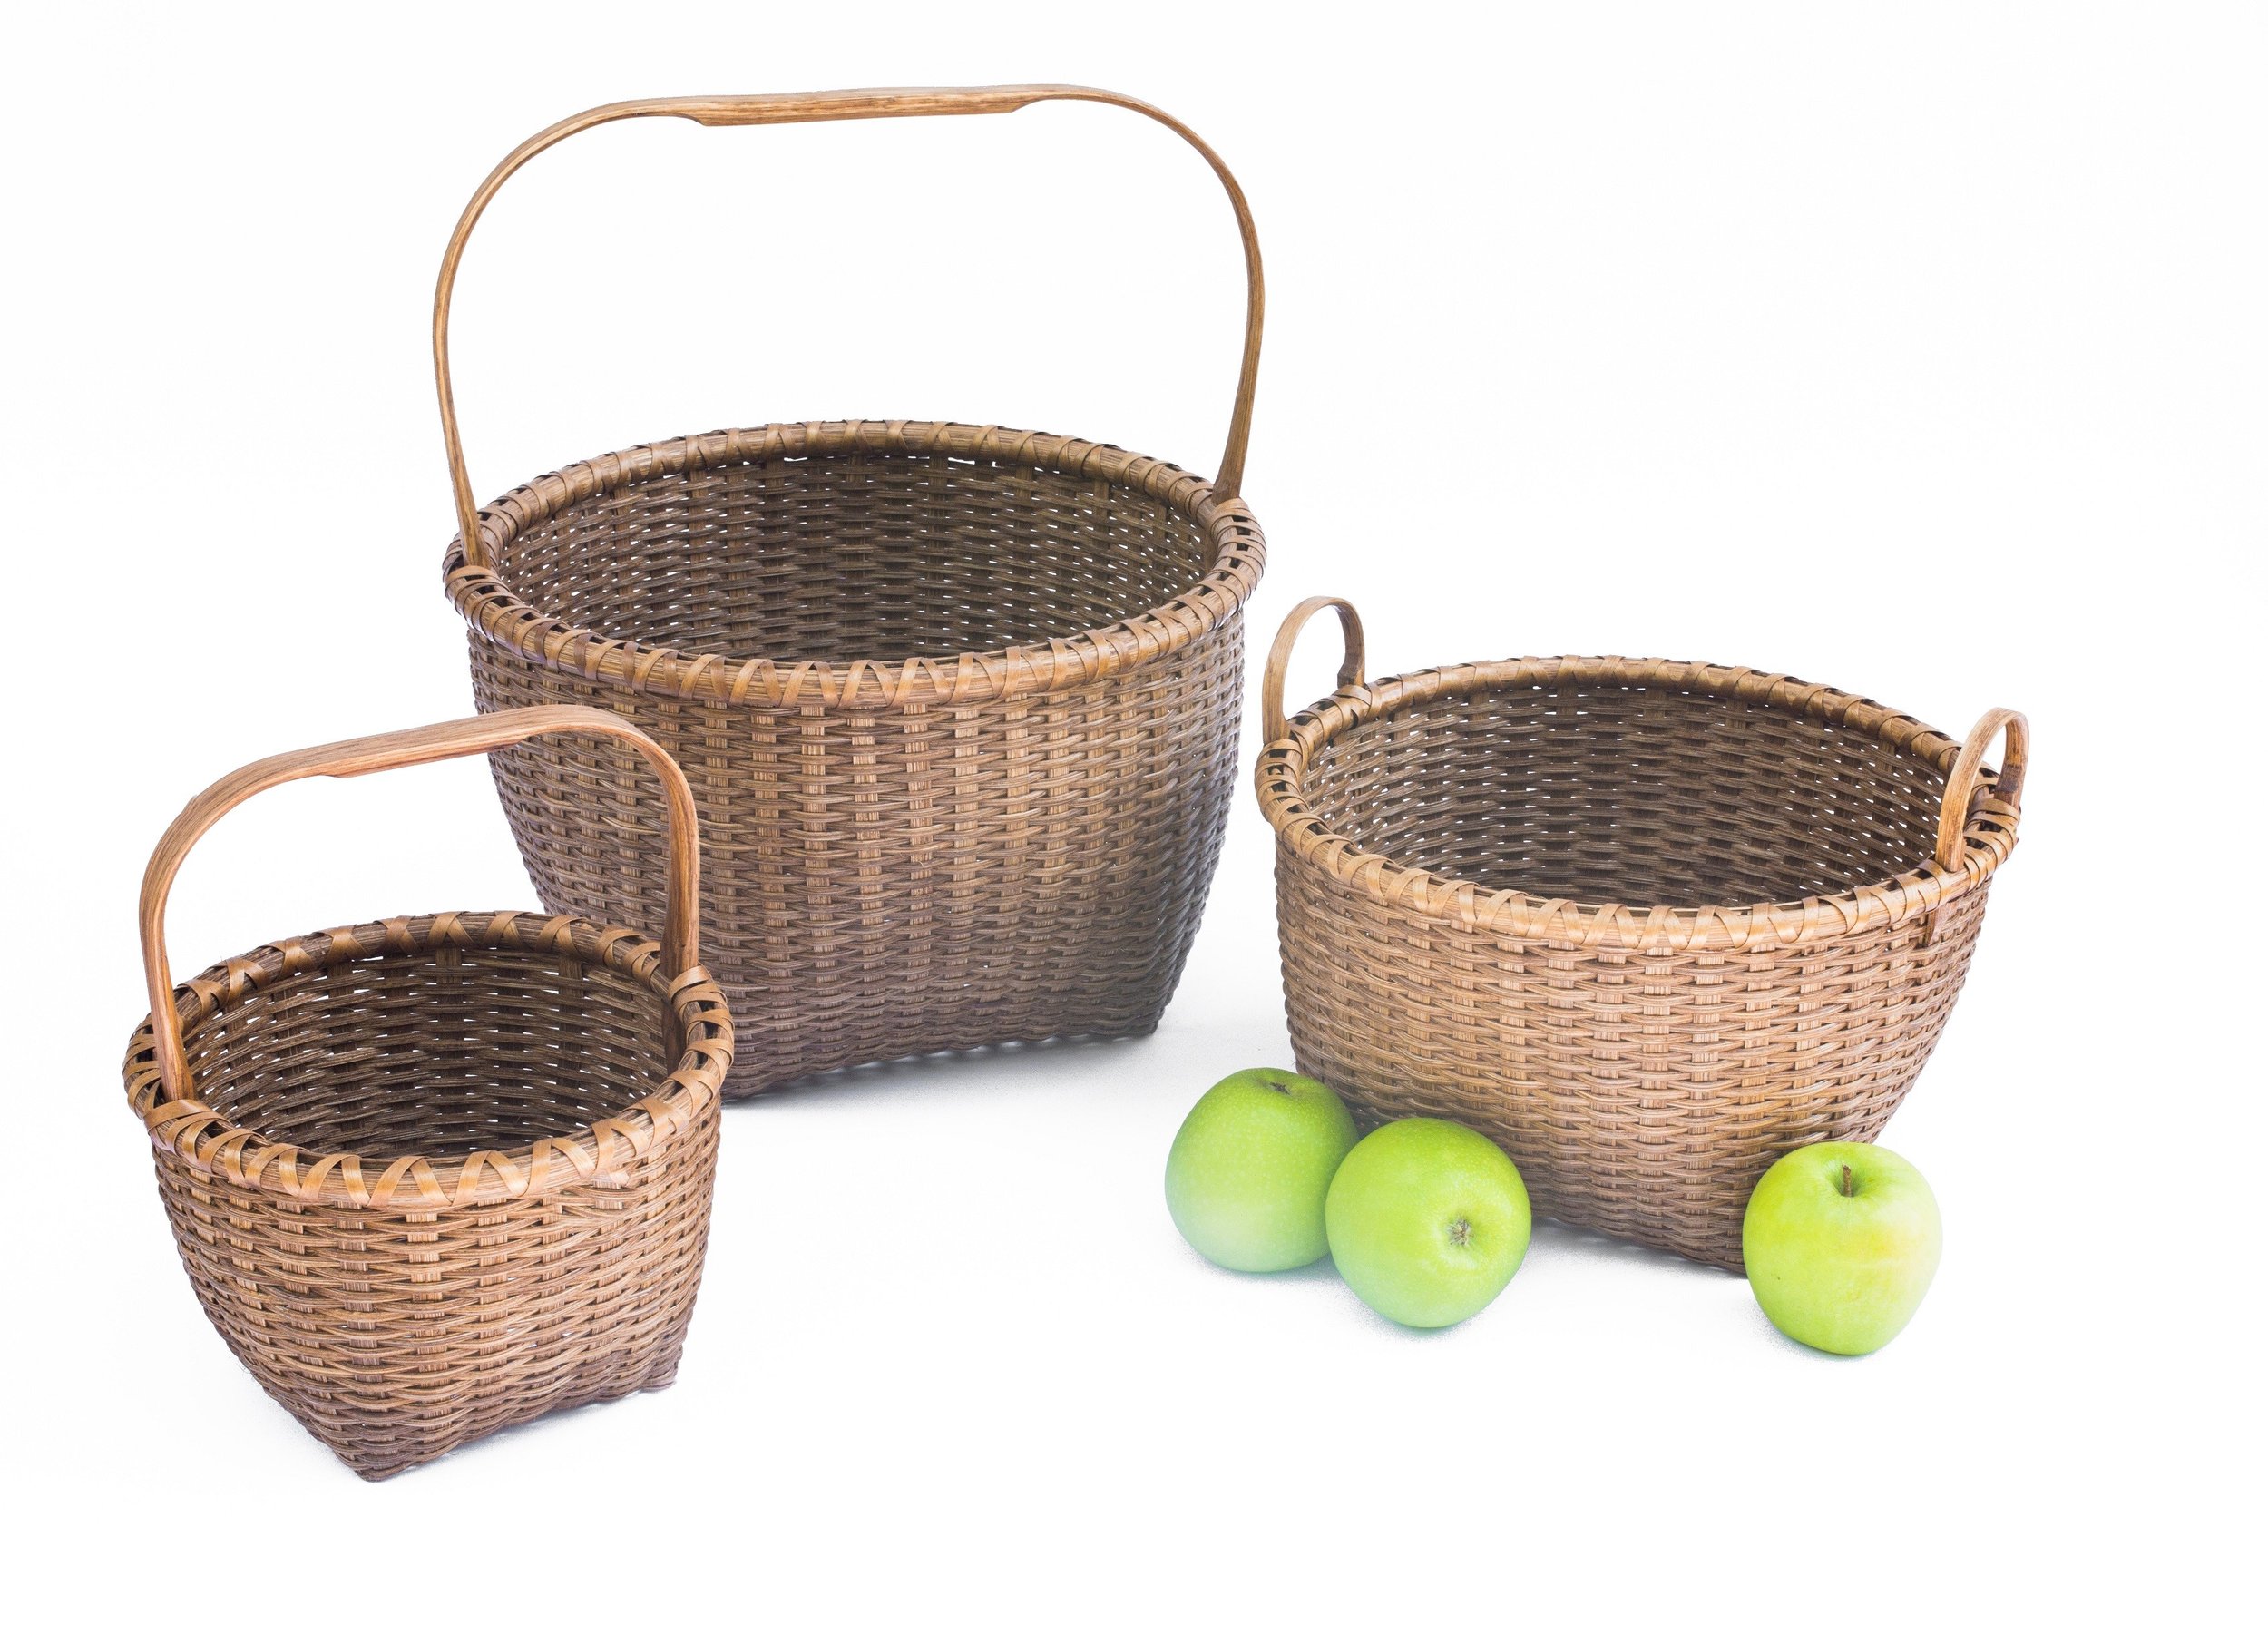 Apple baskets set.jpeg